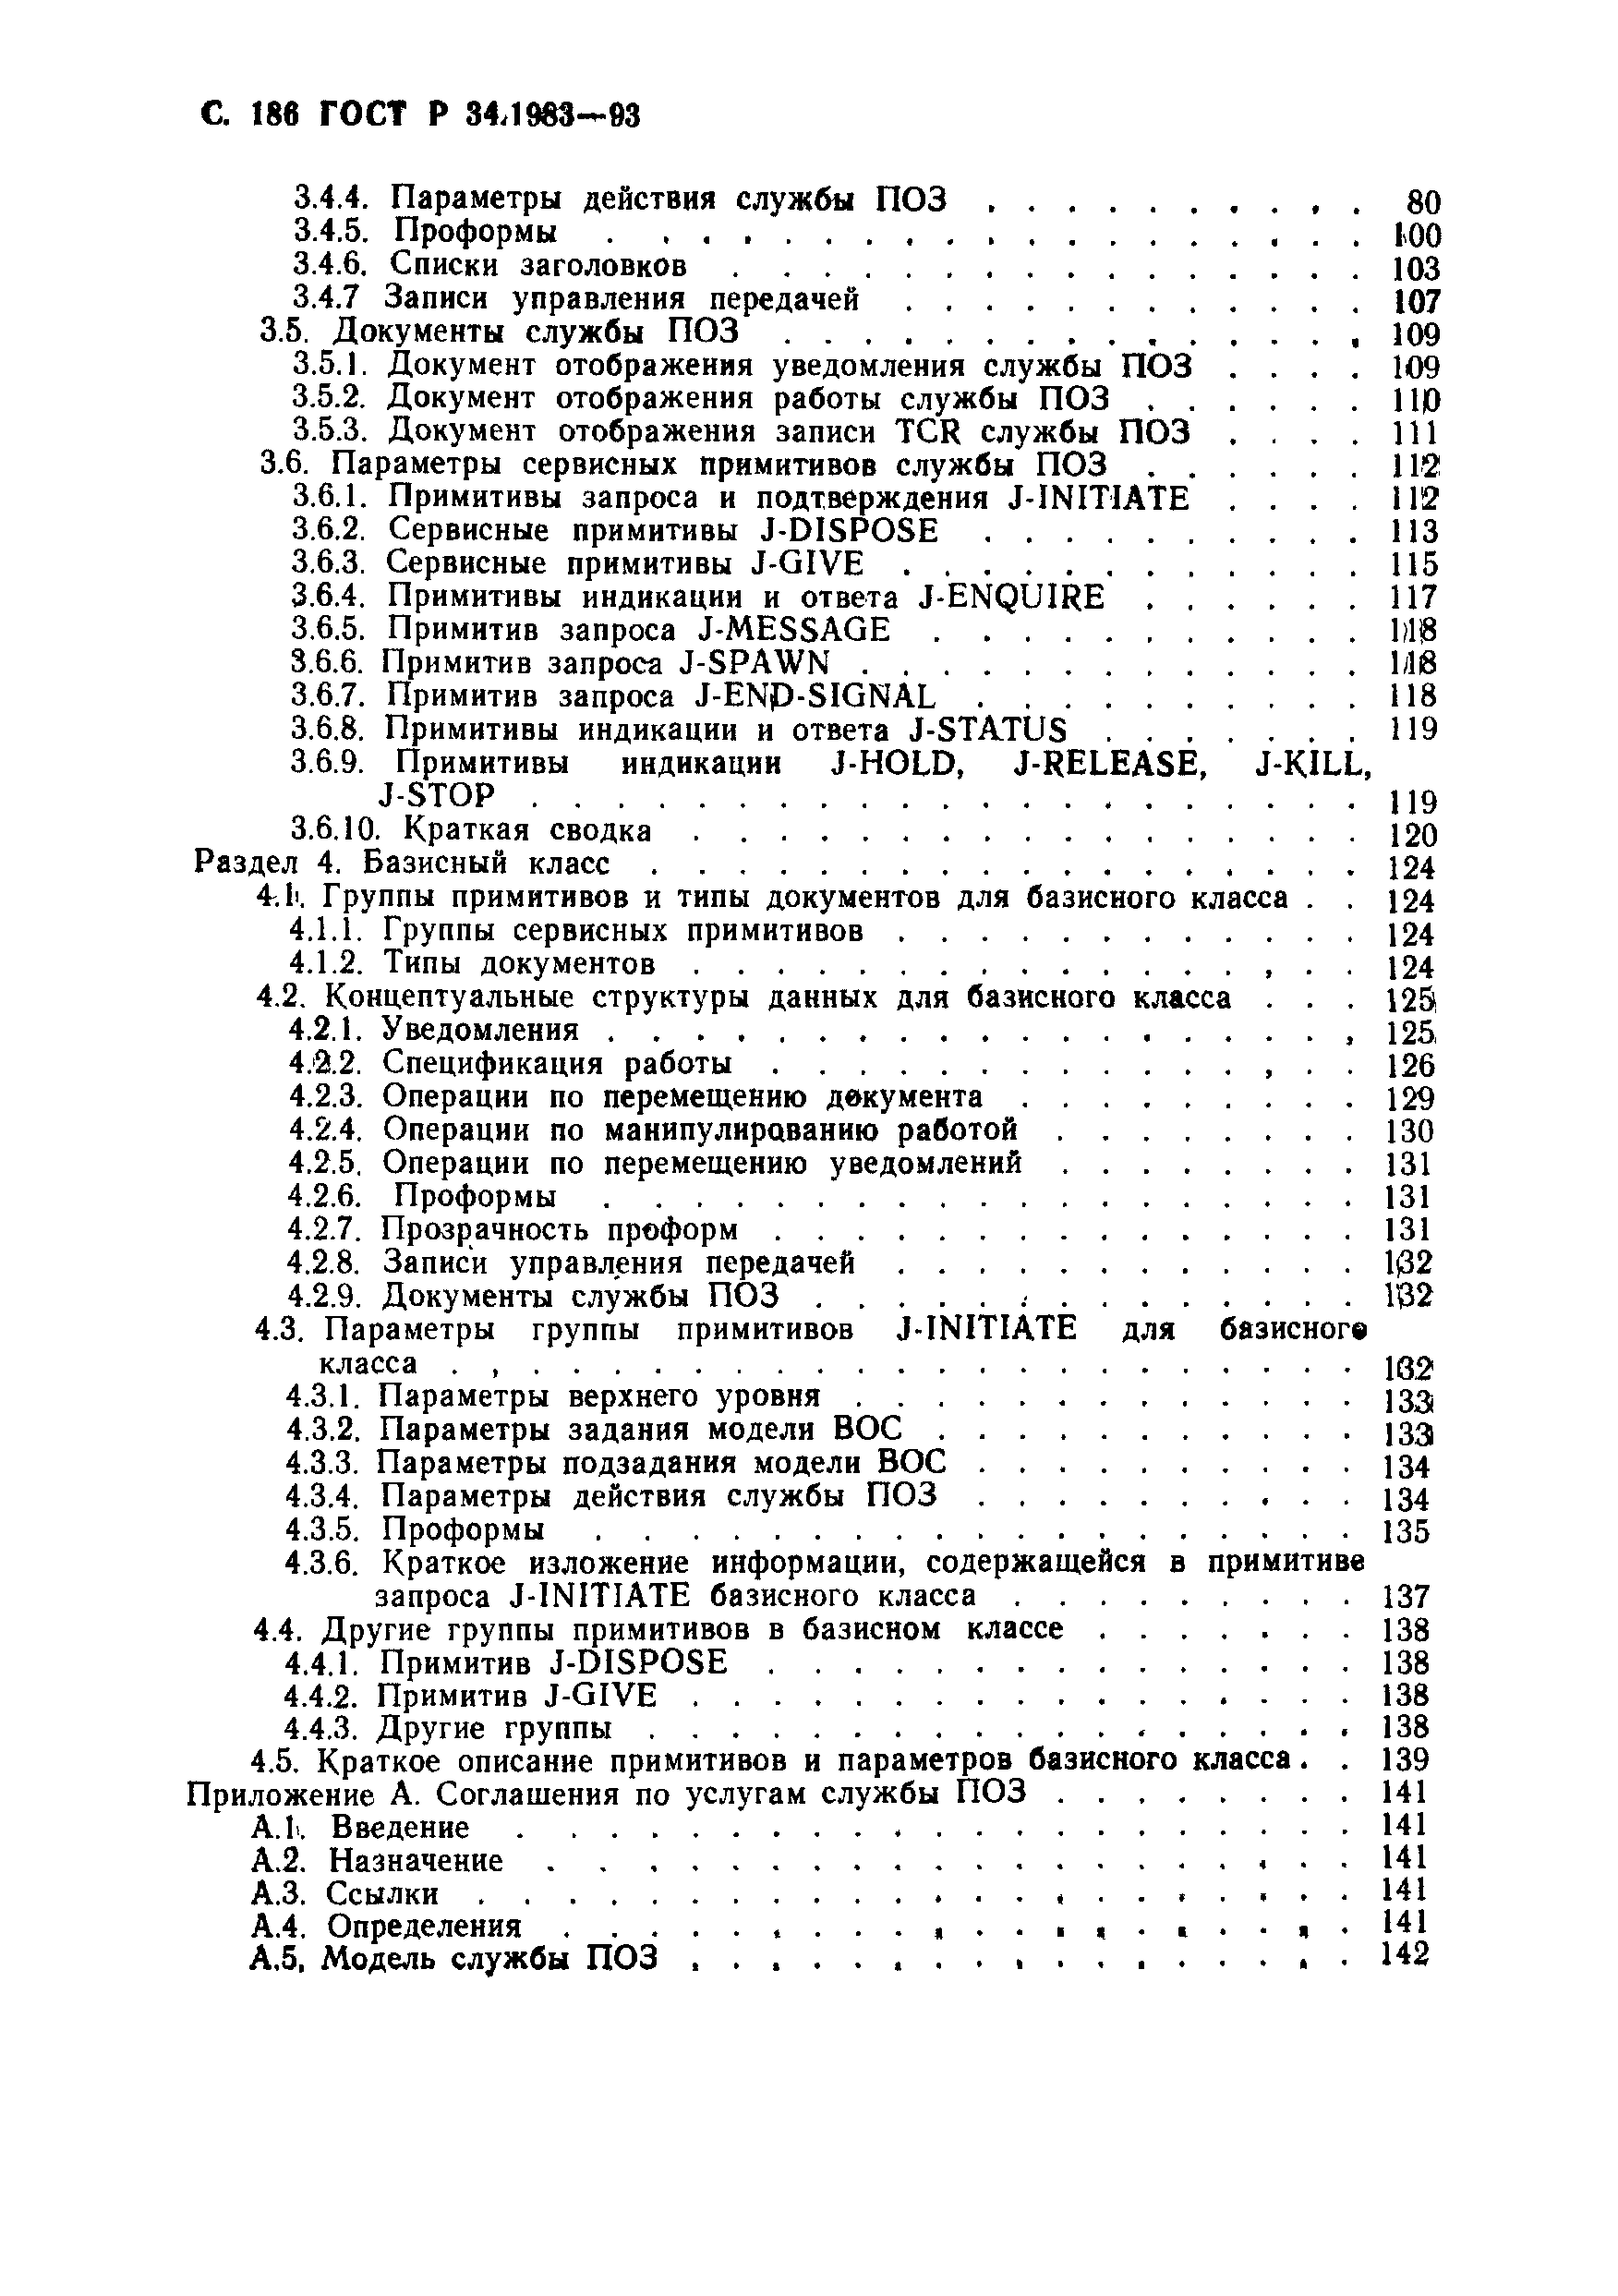 ГОСТ Р 34.1983-93. Страница 187